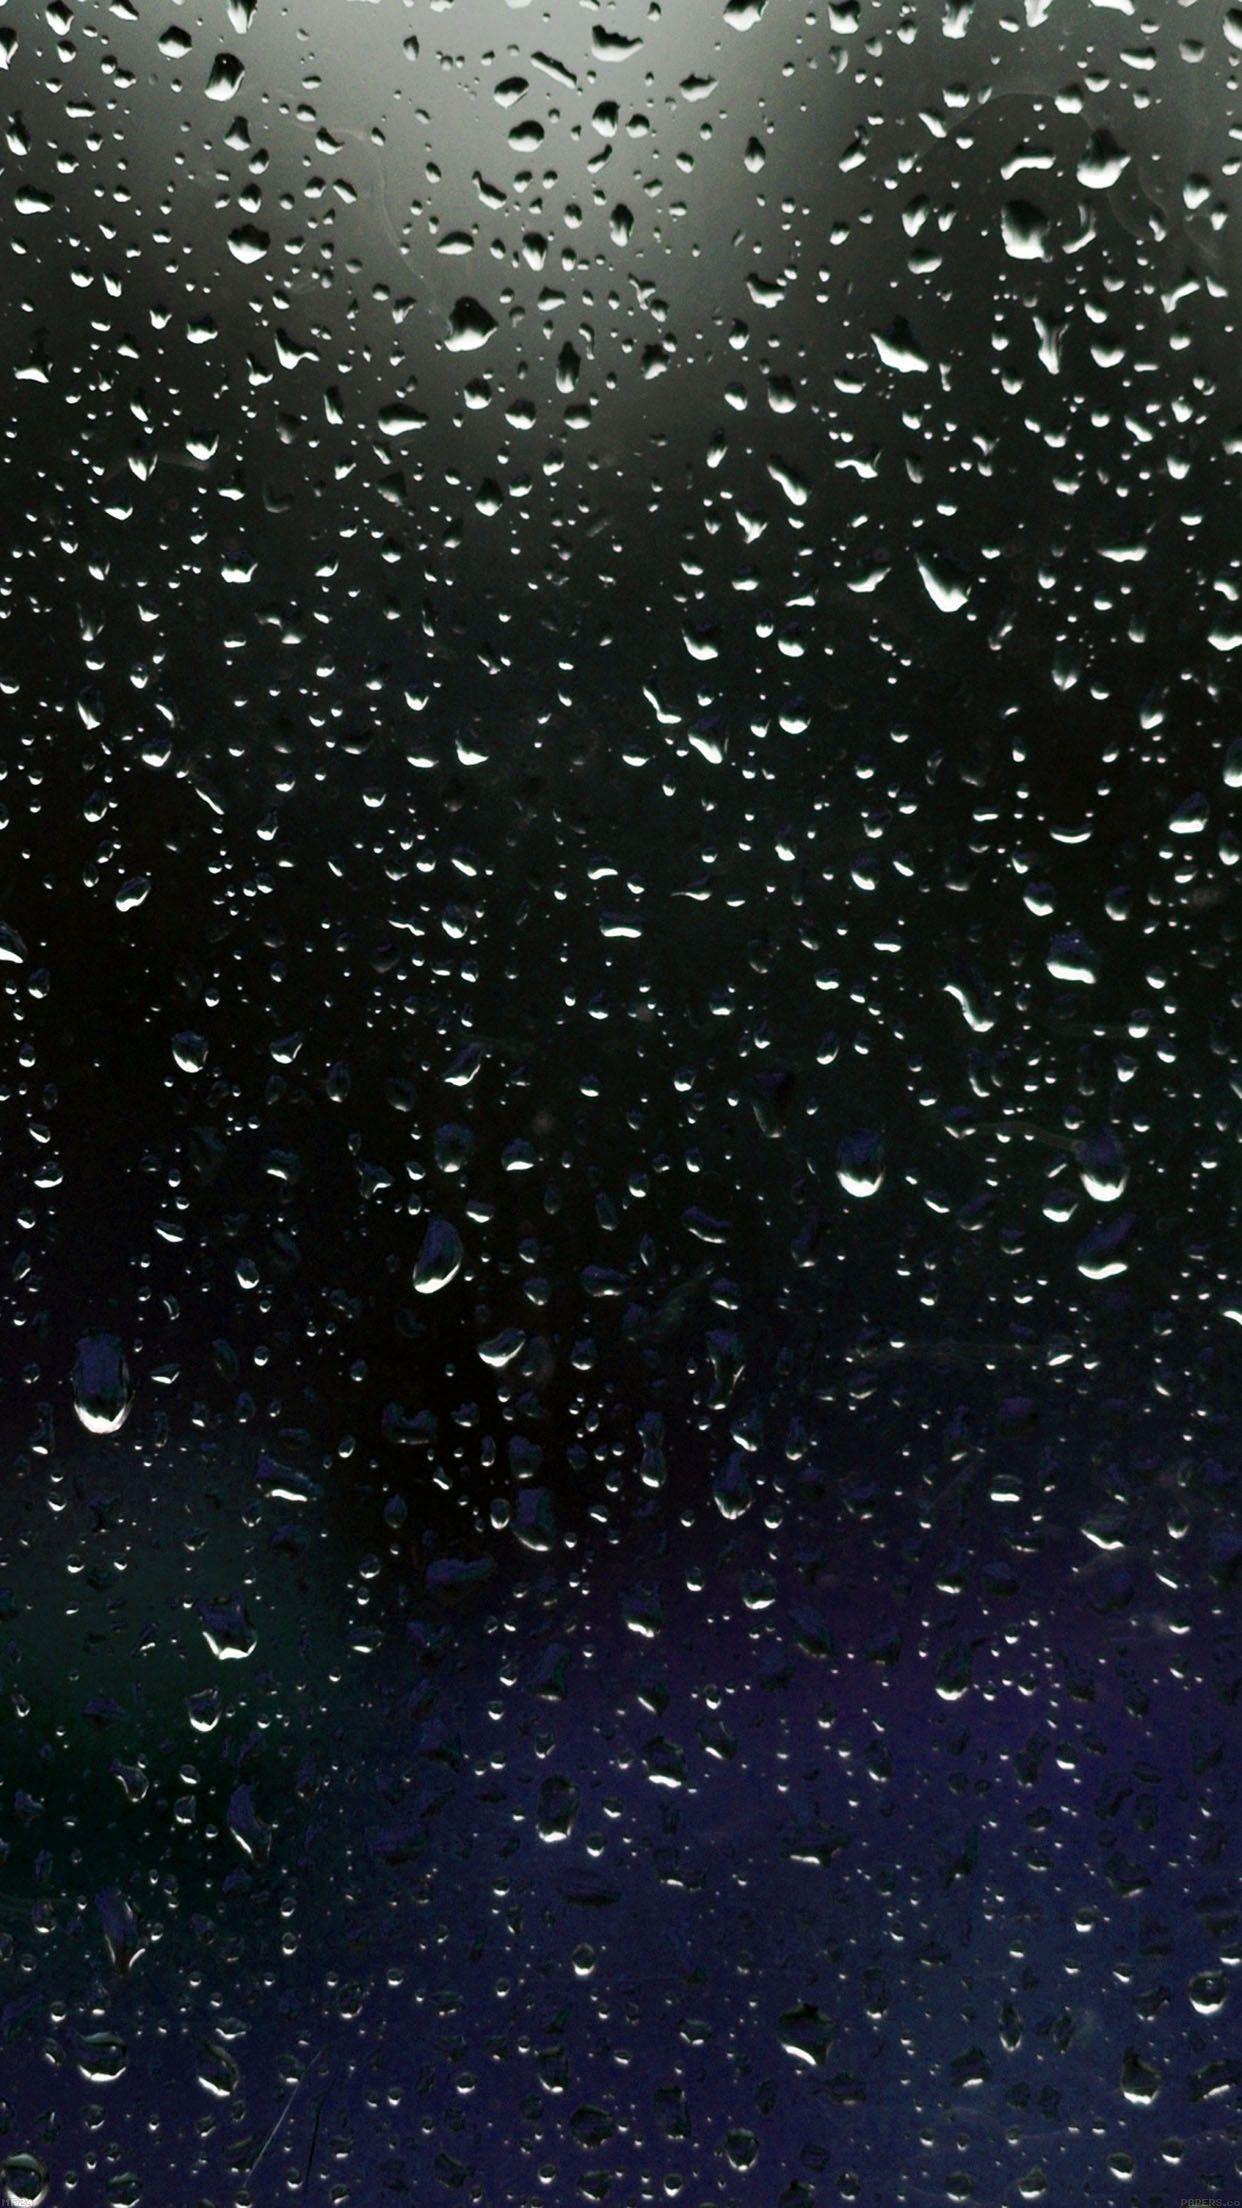 raining windows 10 rain drops nature iPhone 6 Plus Wallpaper